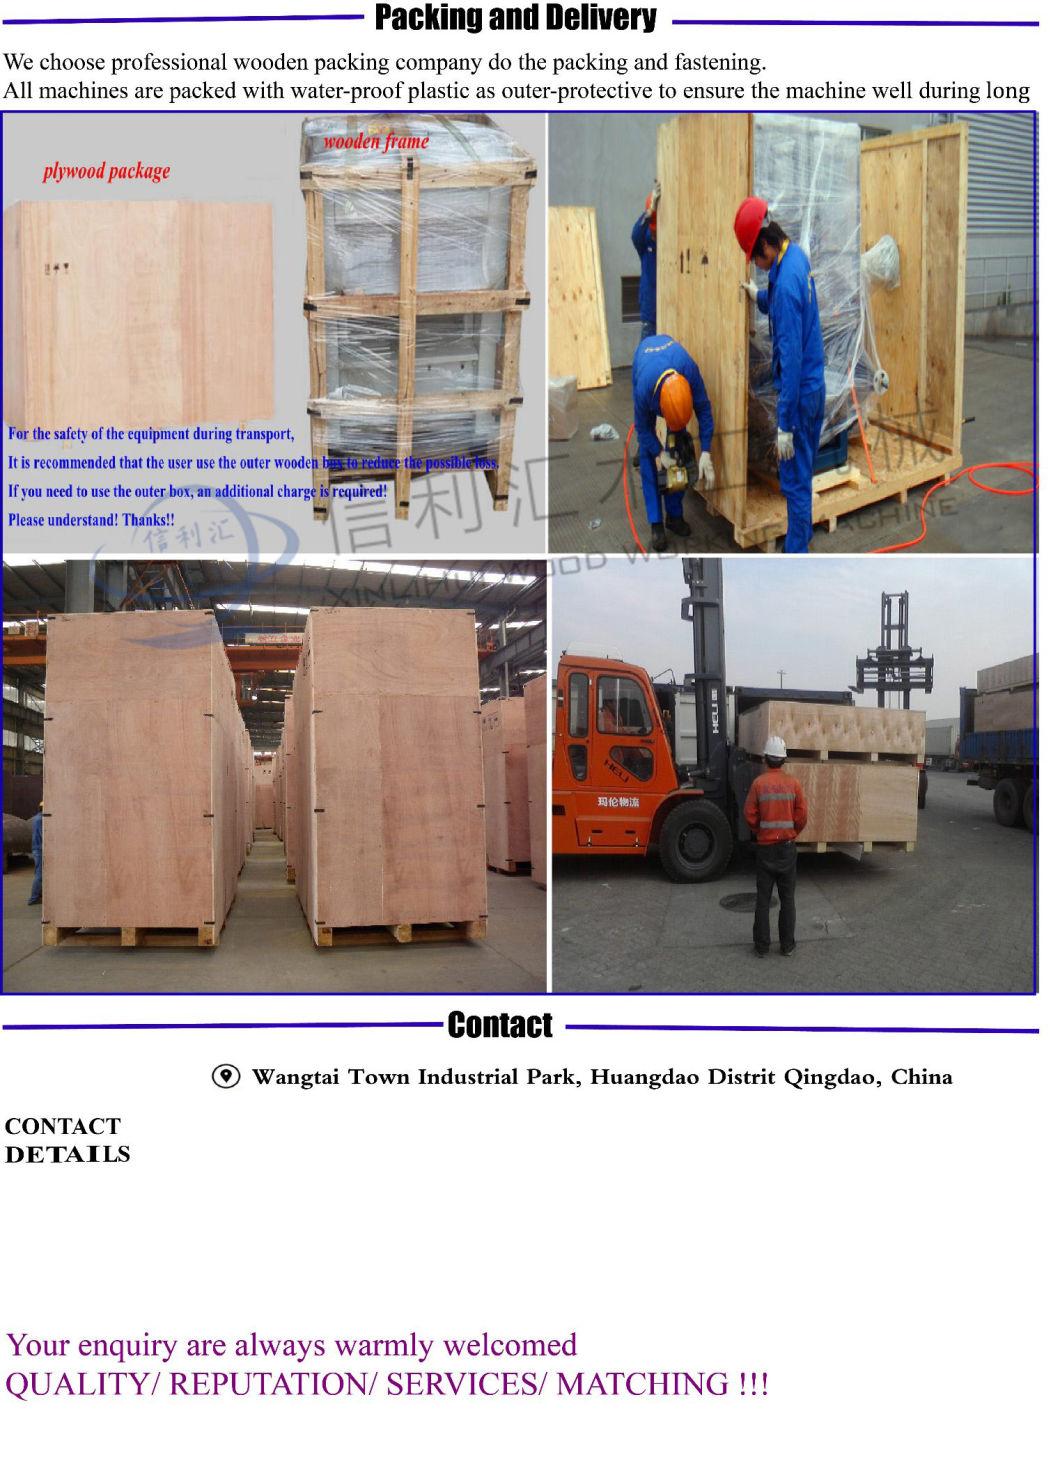 Big Discount! Artcam 3D Wood CNC Router Wood Processing Machine/ CNC Wood Cutting Machine Worldwide Distributor Wanted